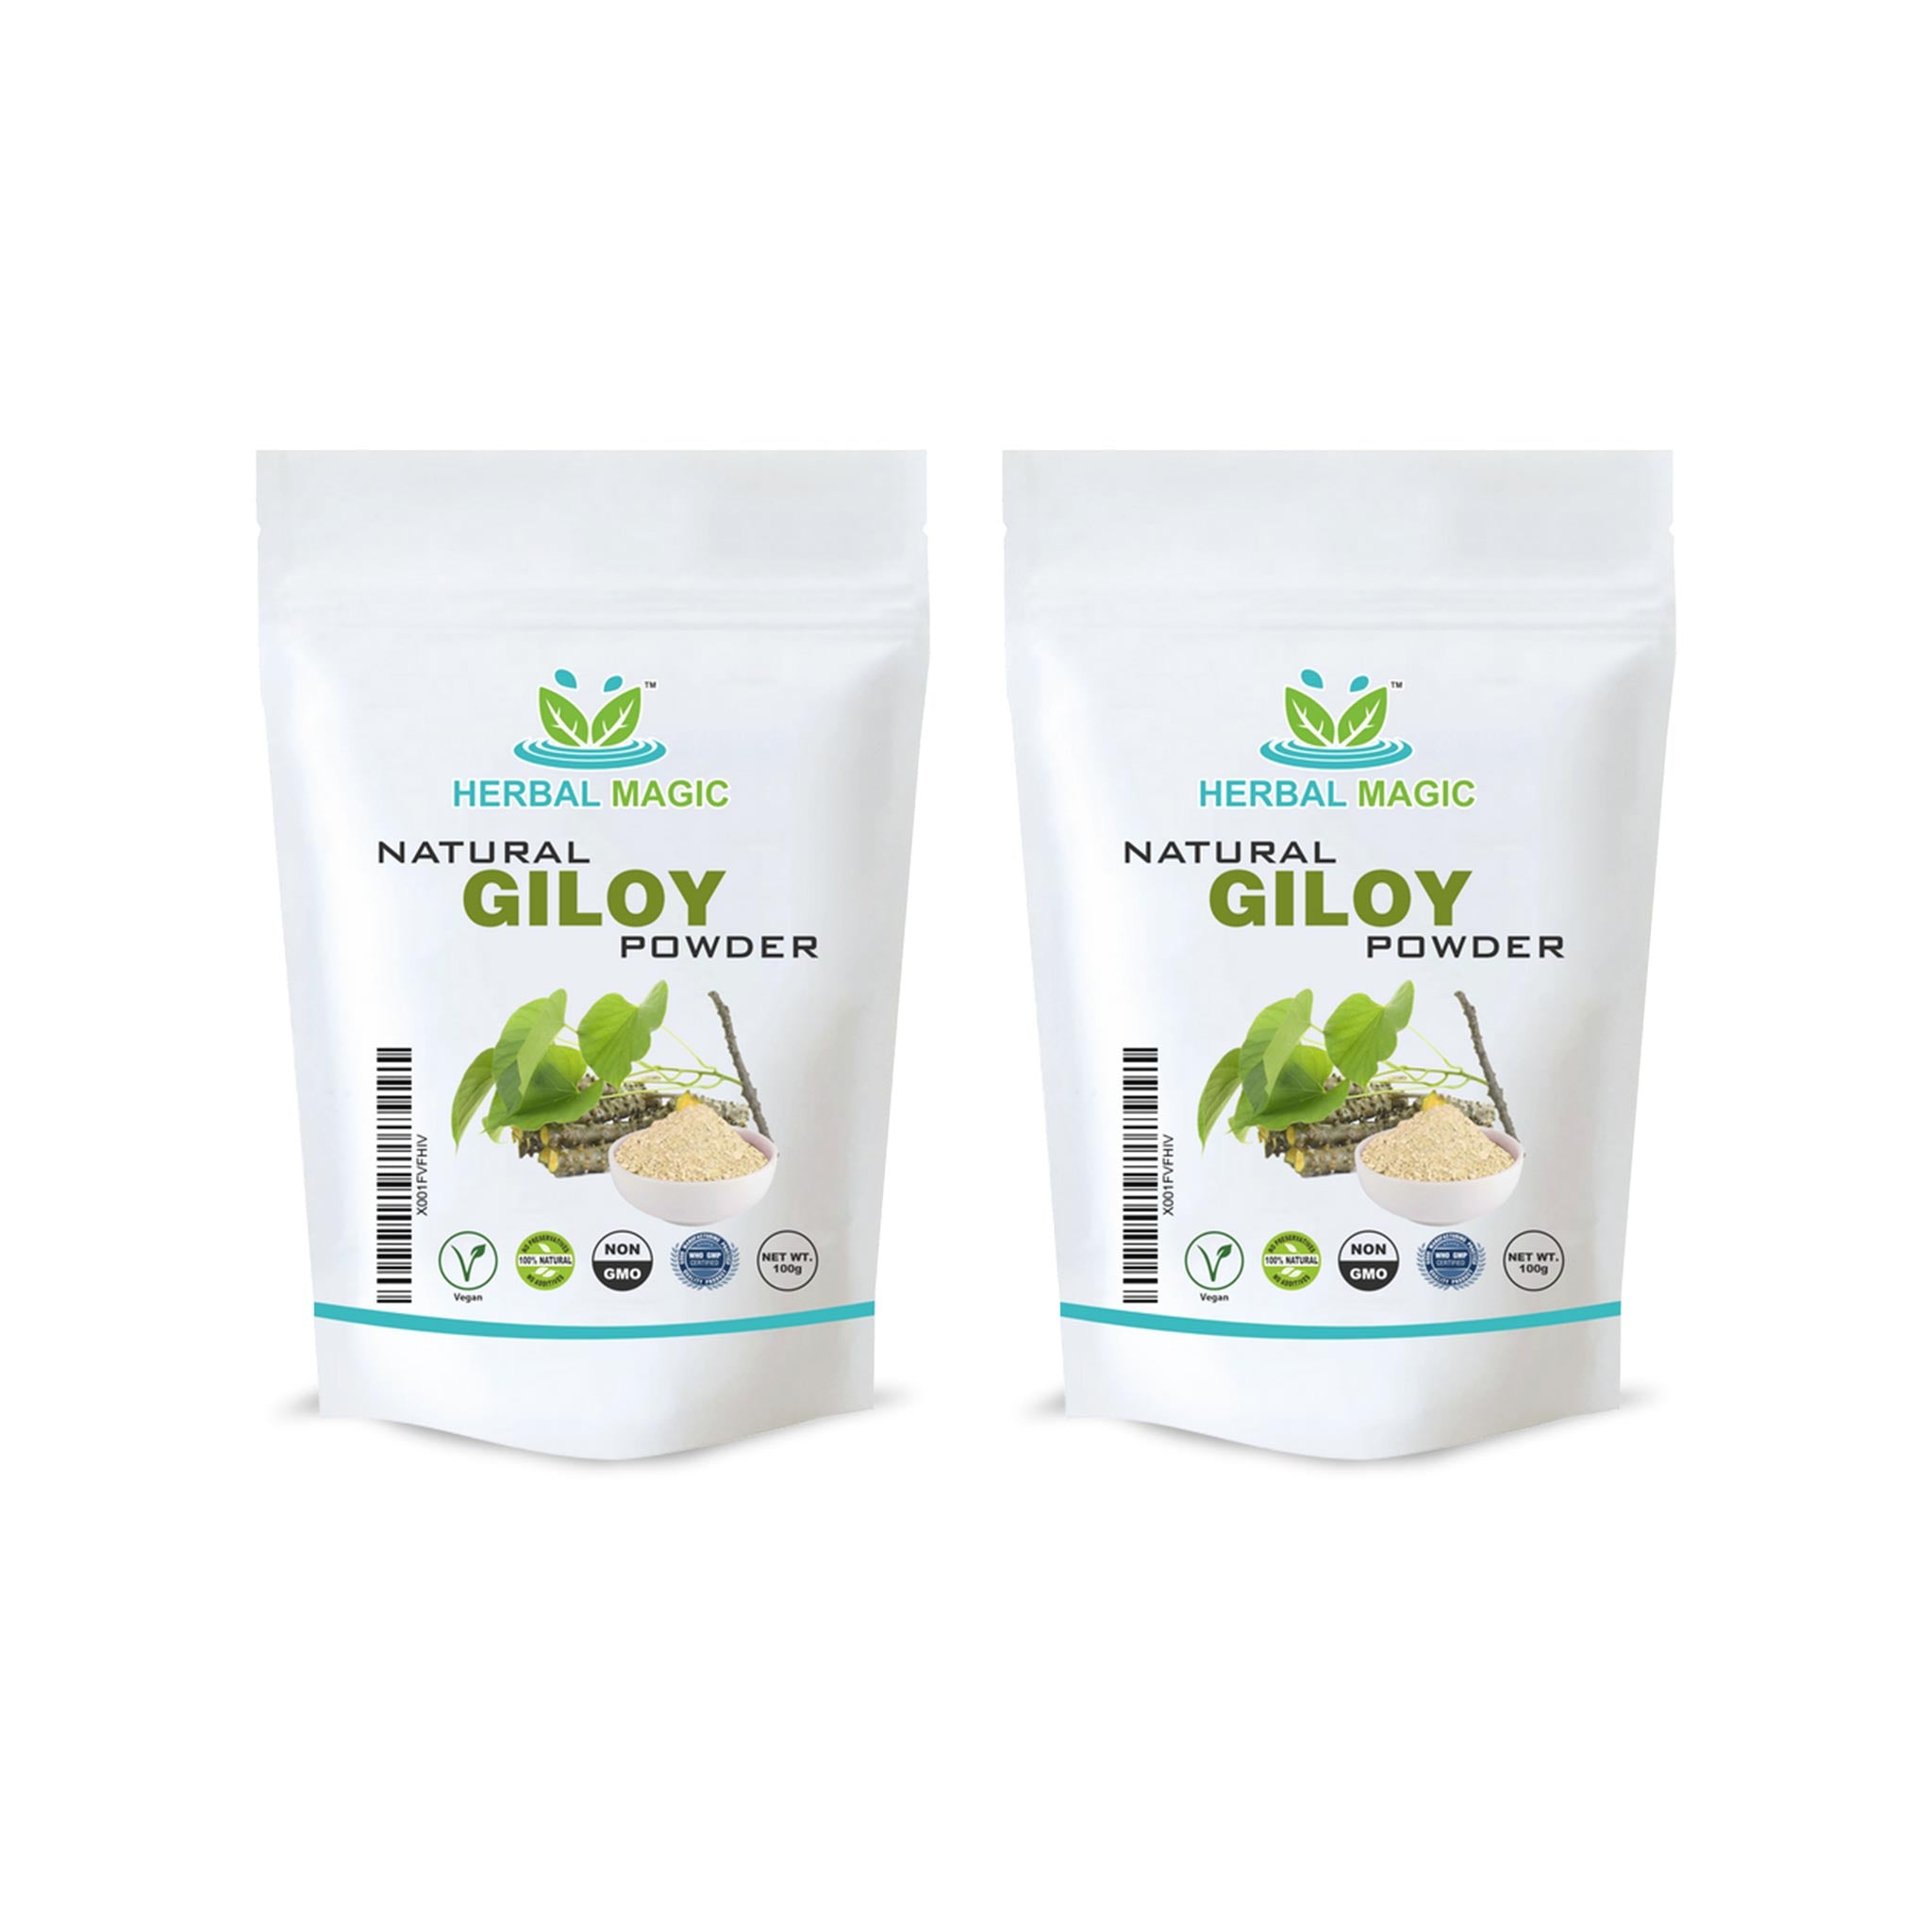 Natural Giloy Powder